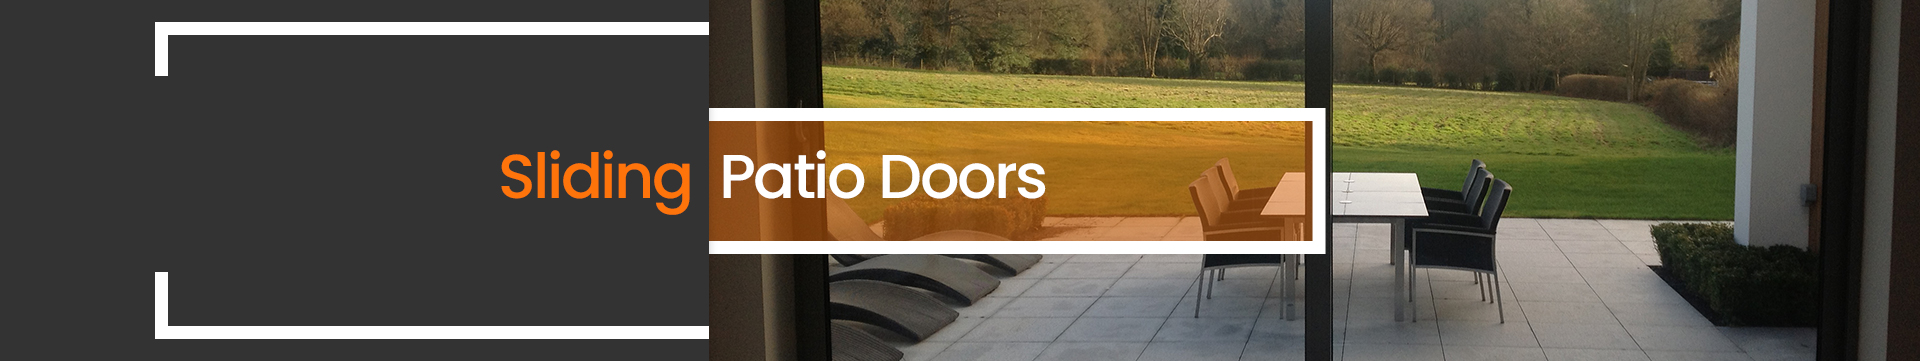 Sliding patio doors in Crawley, West Sussex